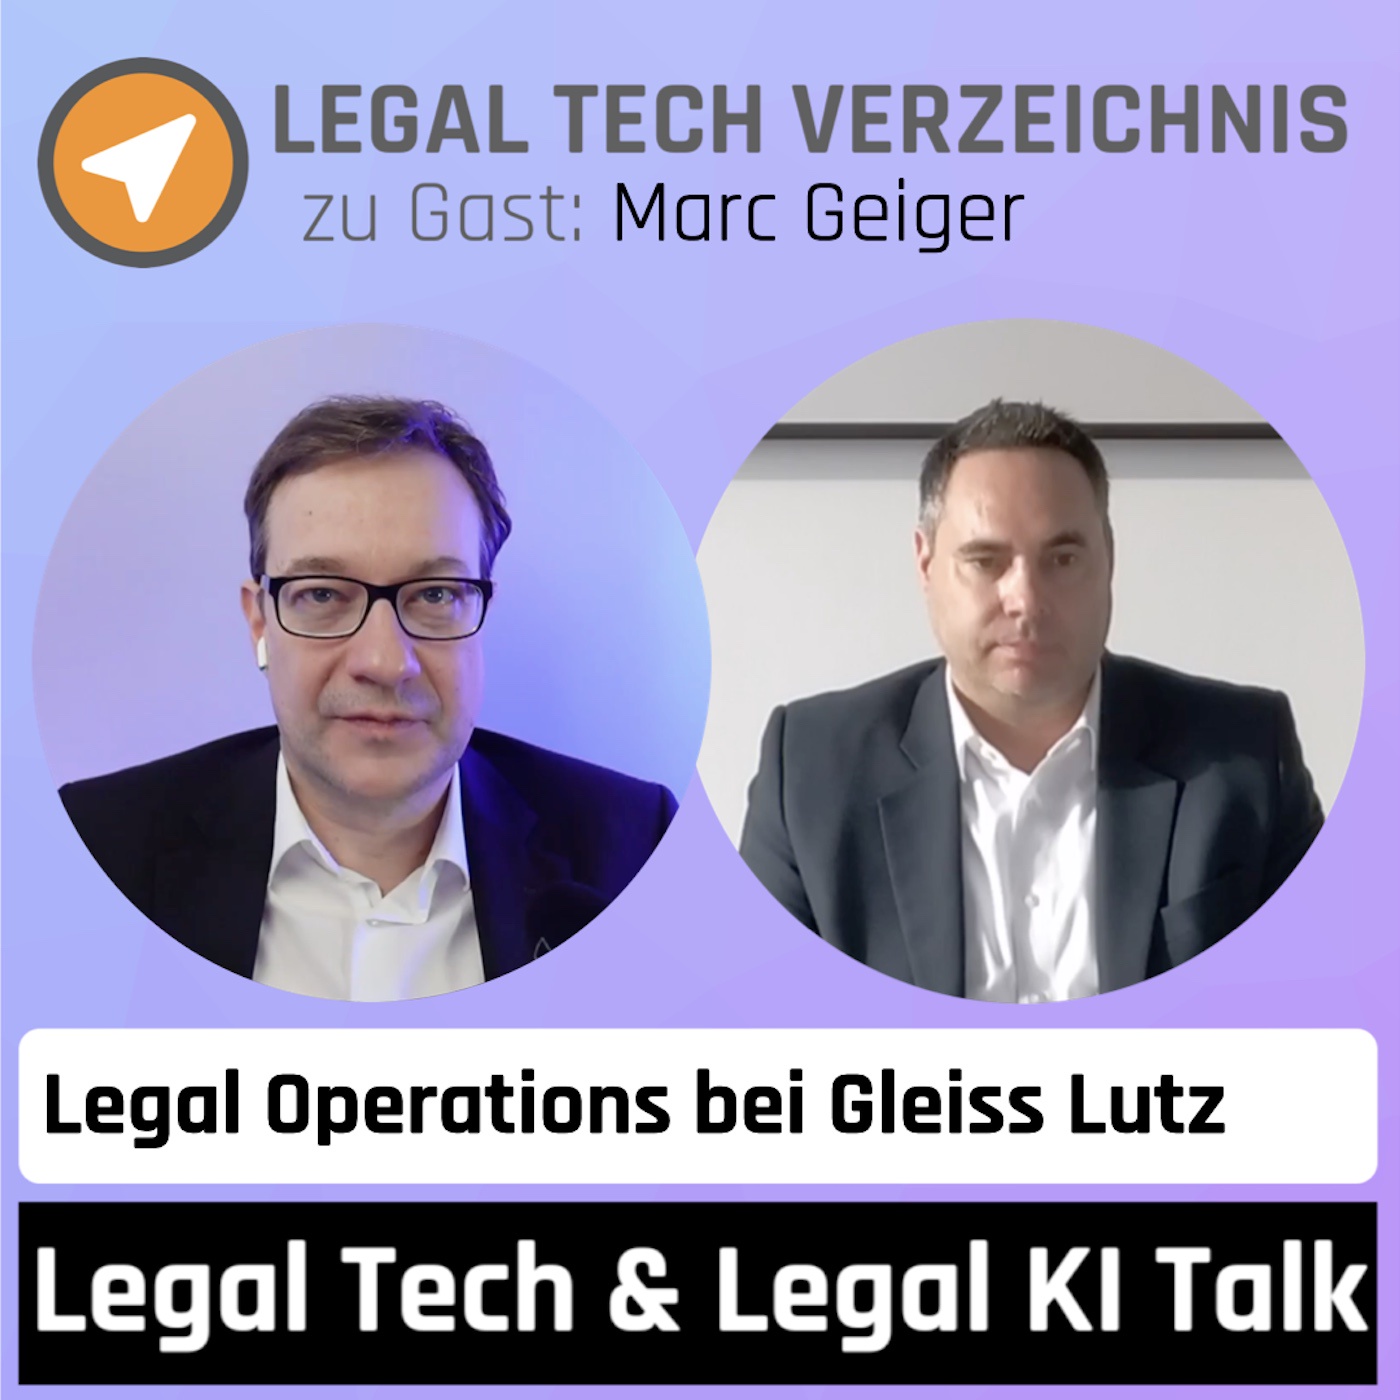 Legal Operations bei Gleiss Lutz